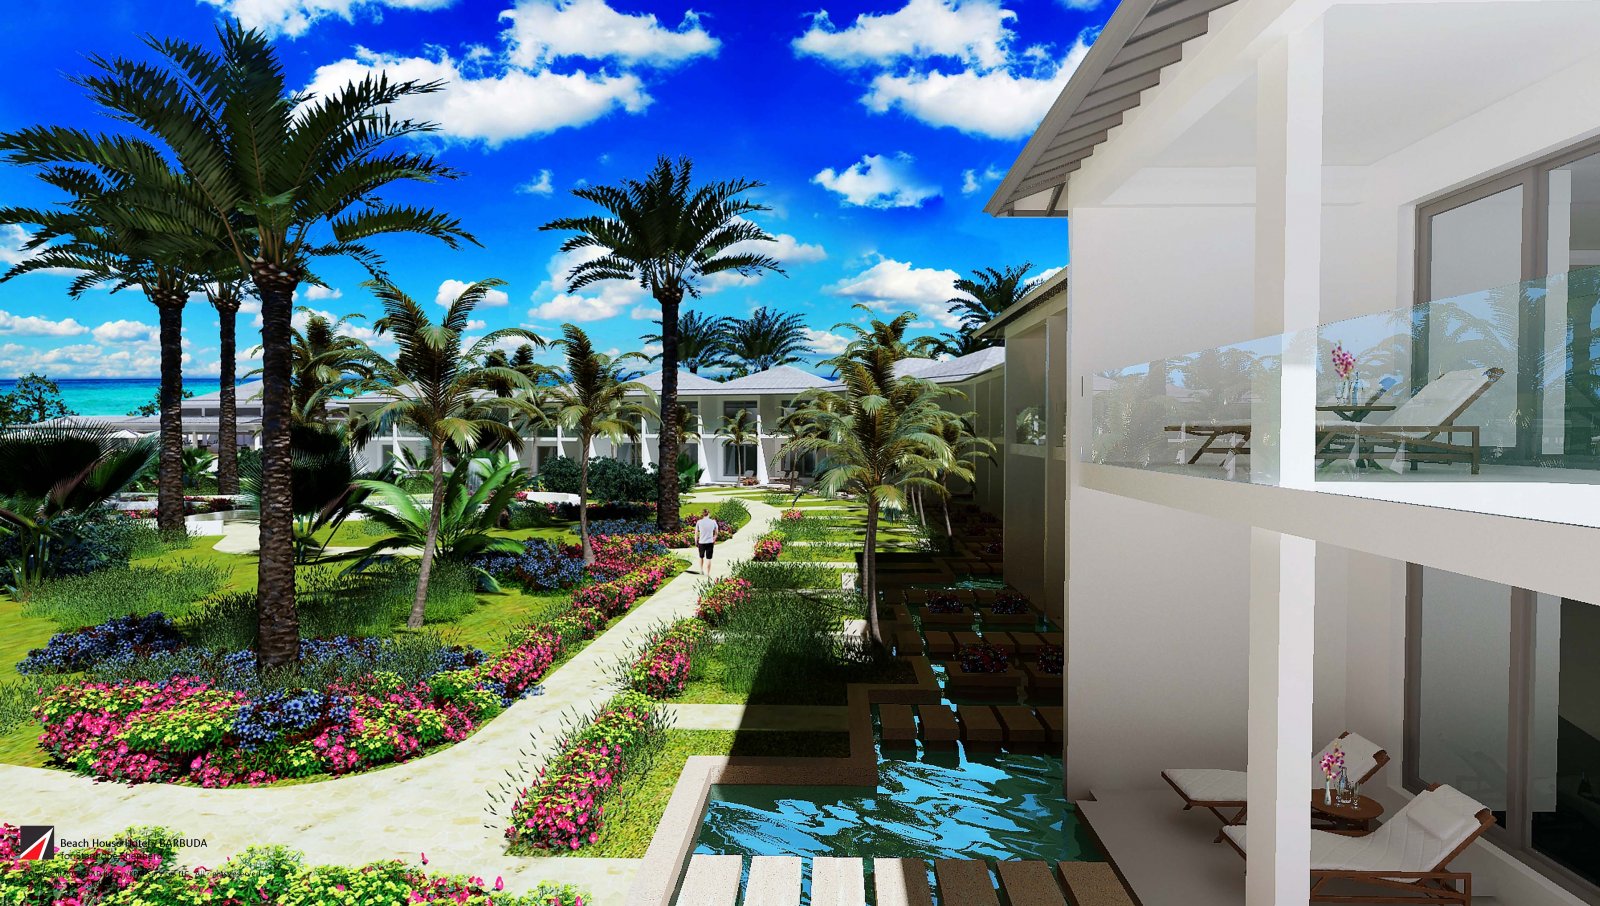 The Beach House Resort Hotel - Caribbean